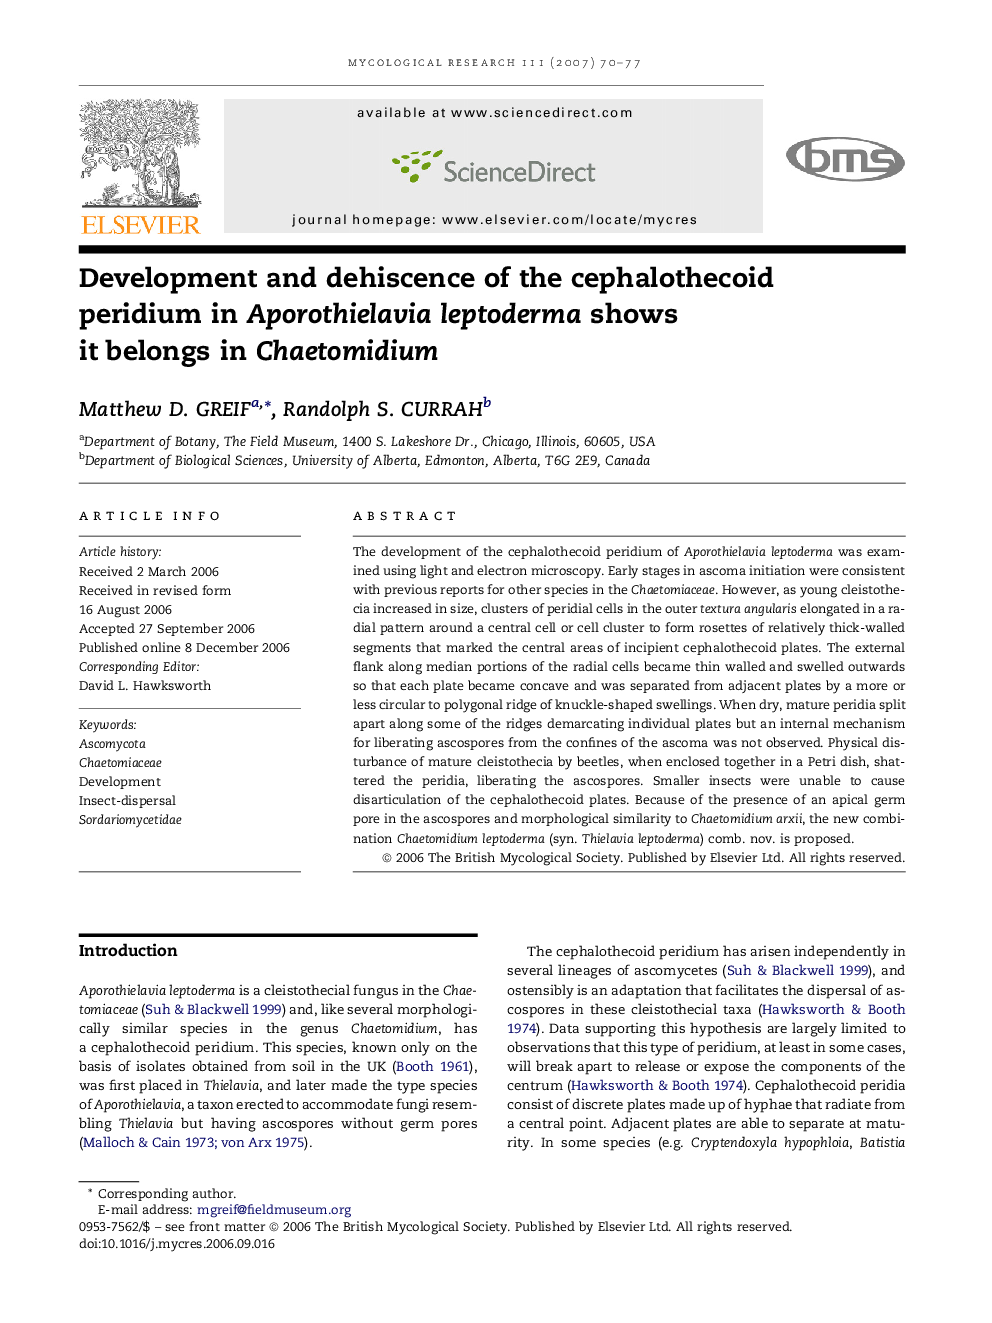 Development and dehiscence of the cephalothecoid peridium in Aporothielavia leptoderma shows it belongs in Chaetomidium